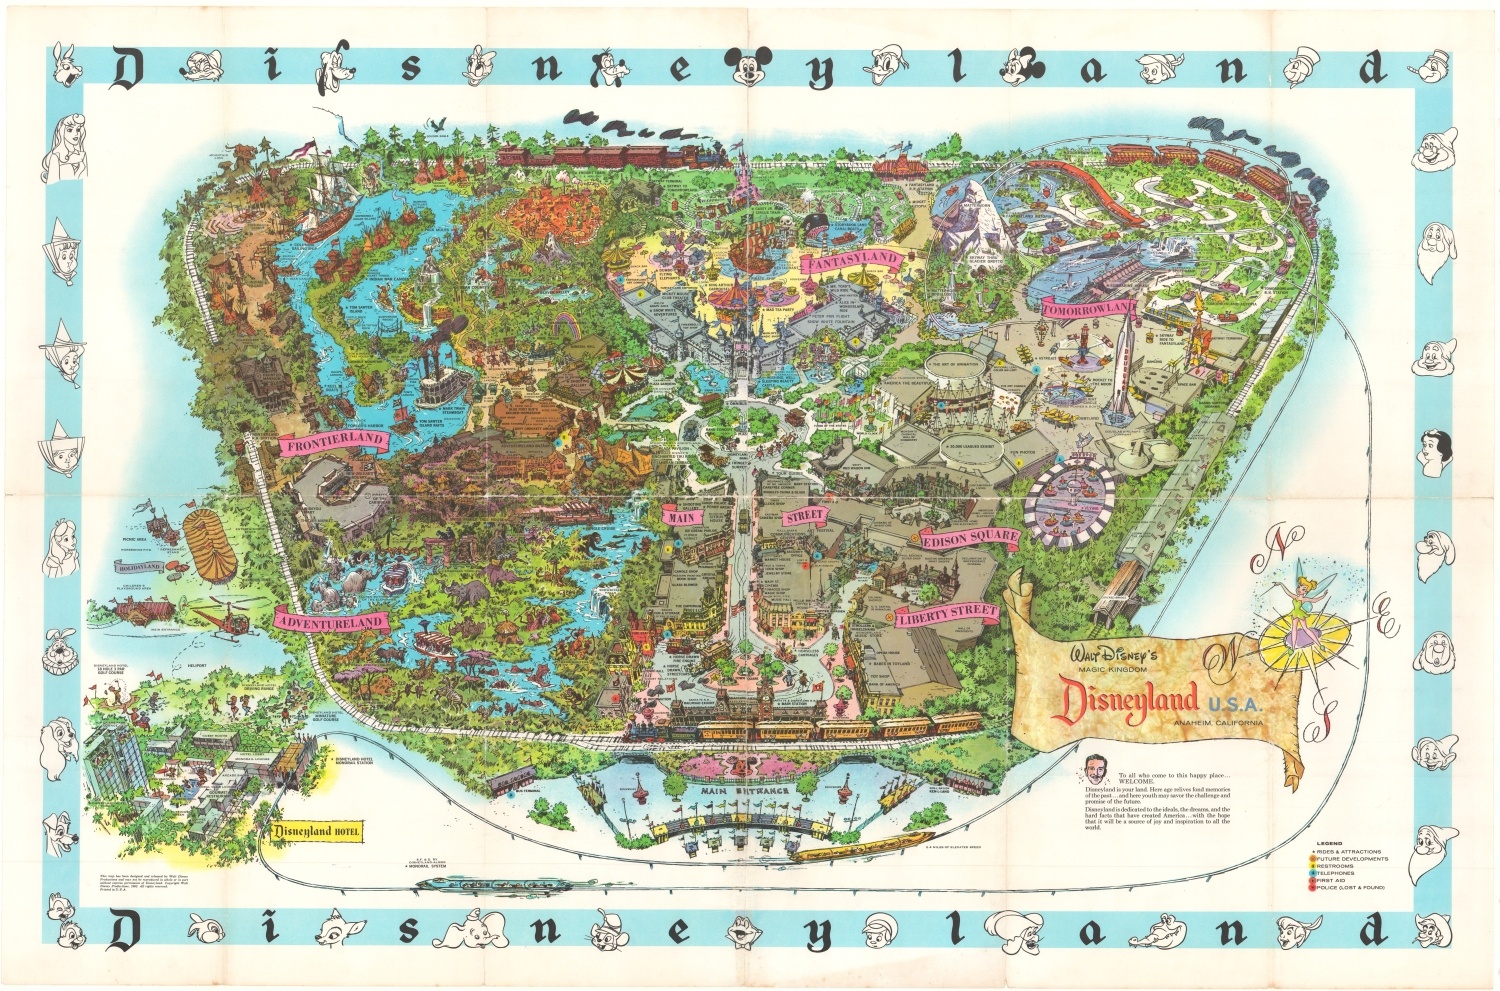 Disneyland U.S.A. Anaheim, California Curtis Wright Maps